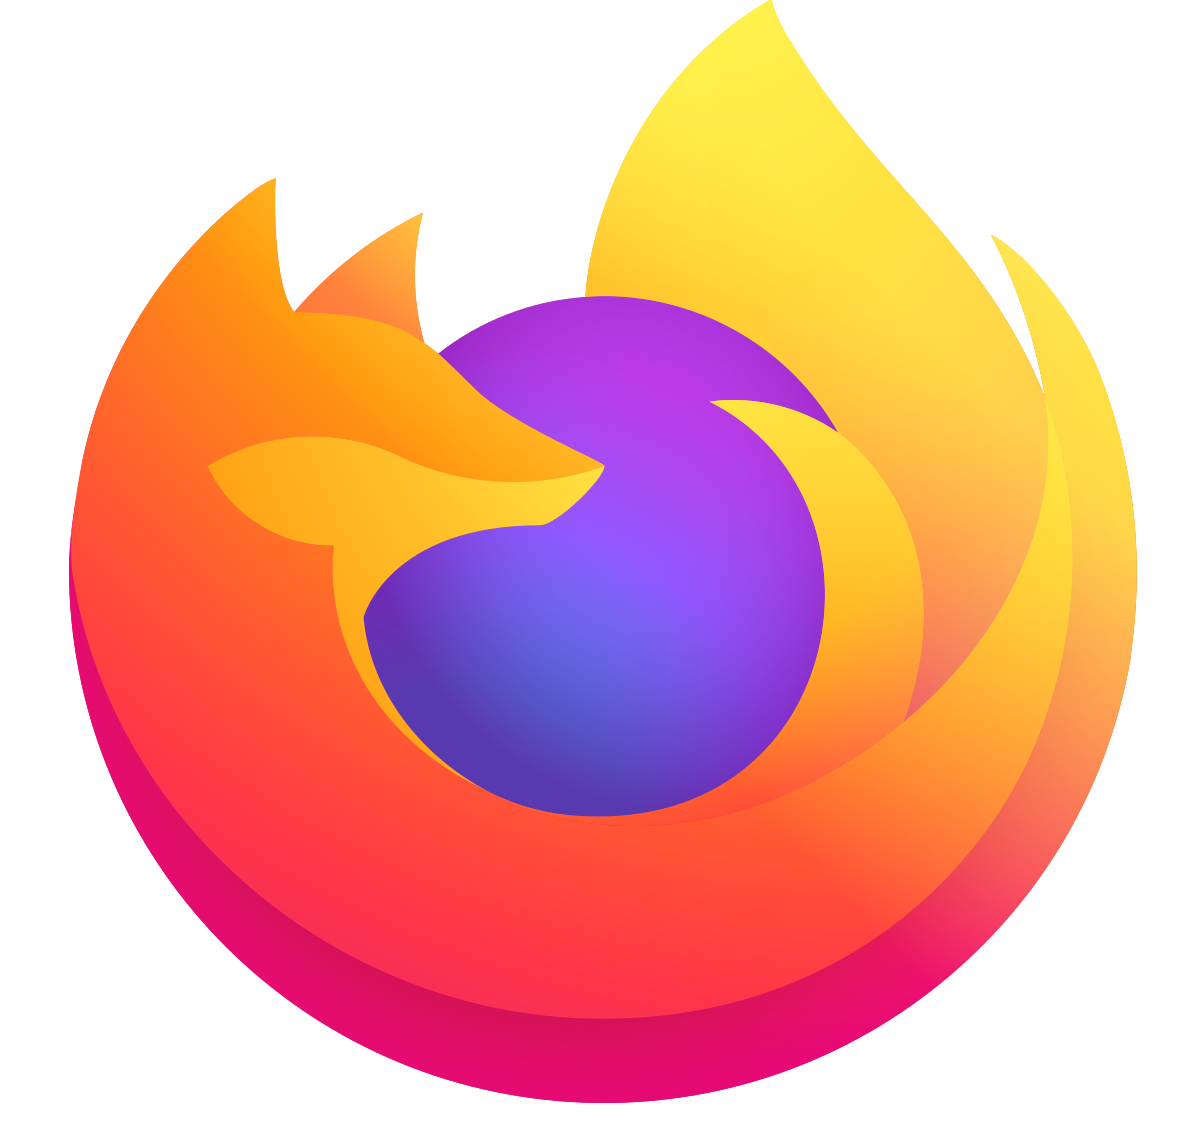 Mozilla firefox update download